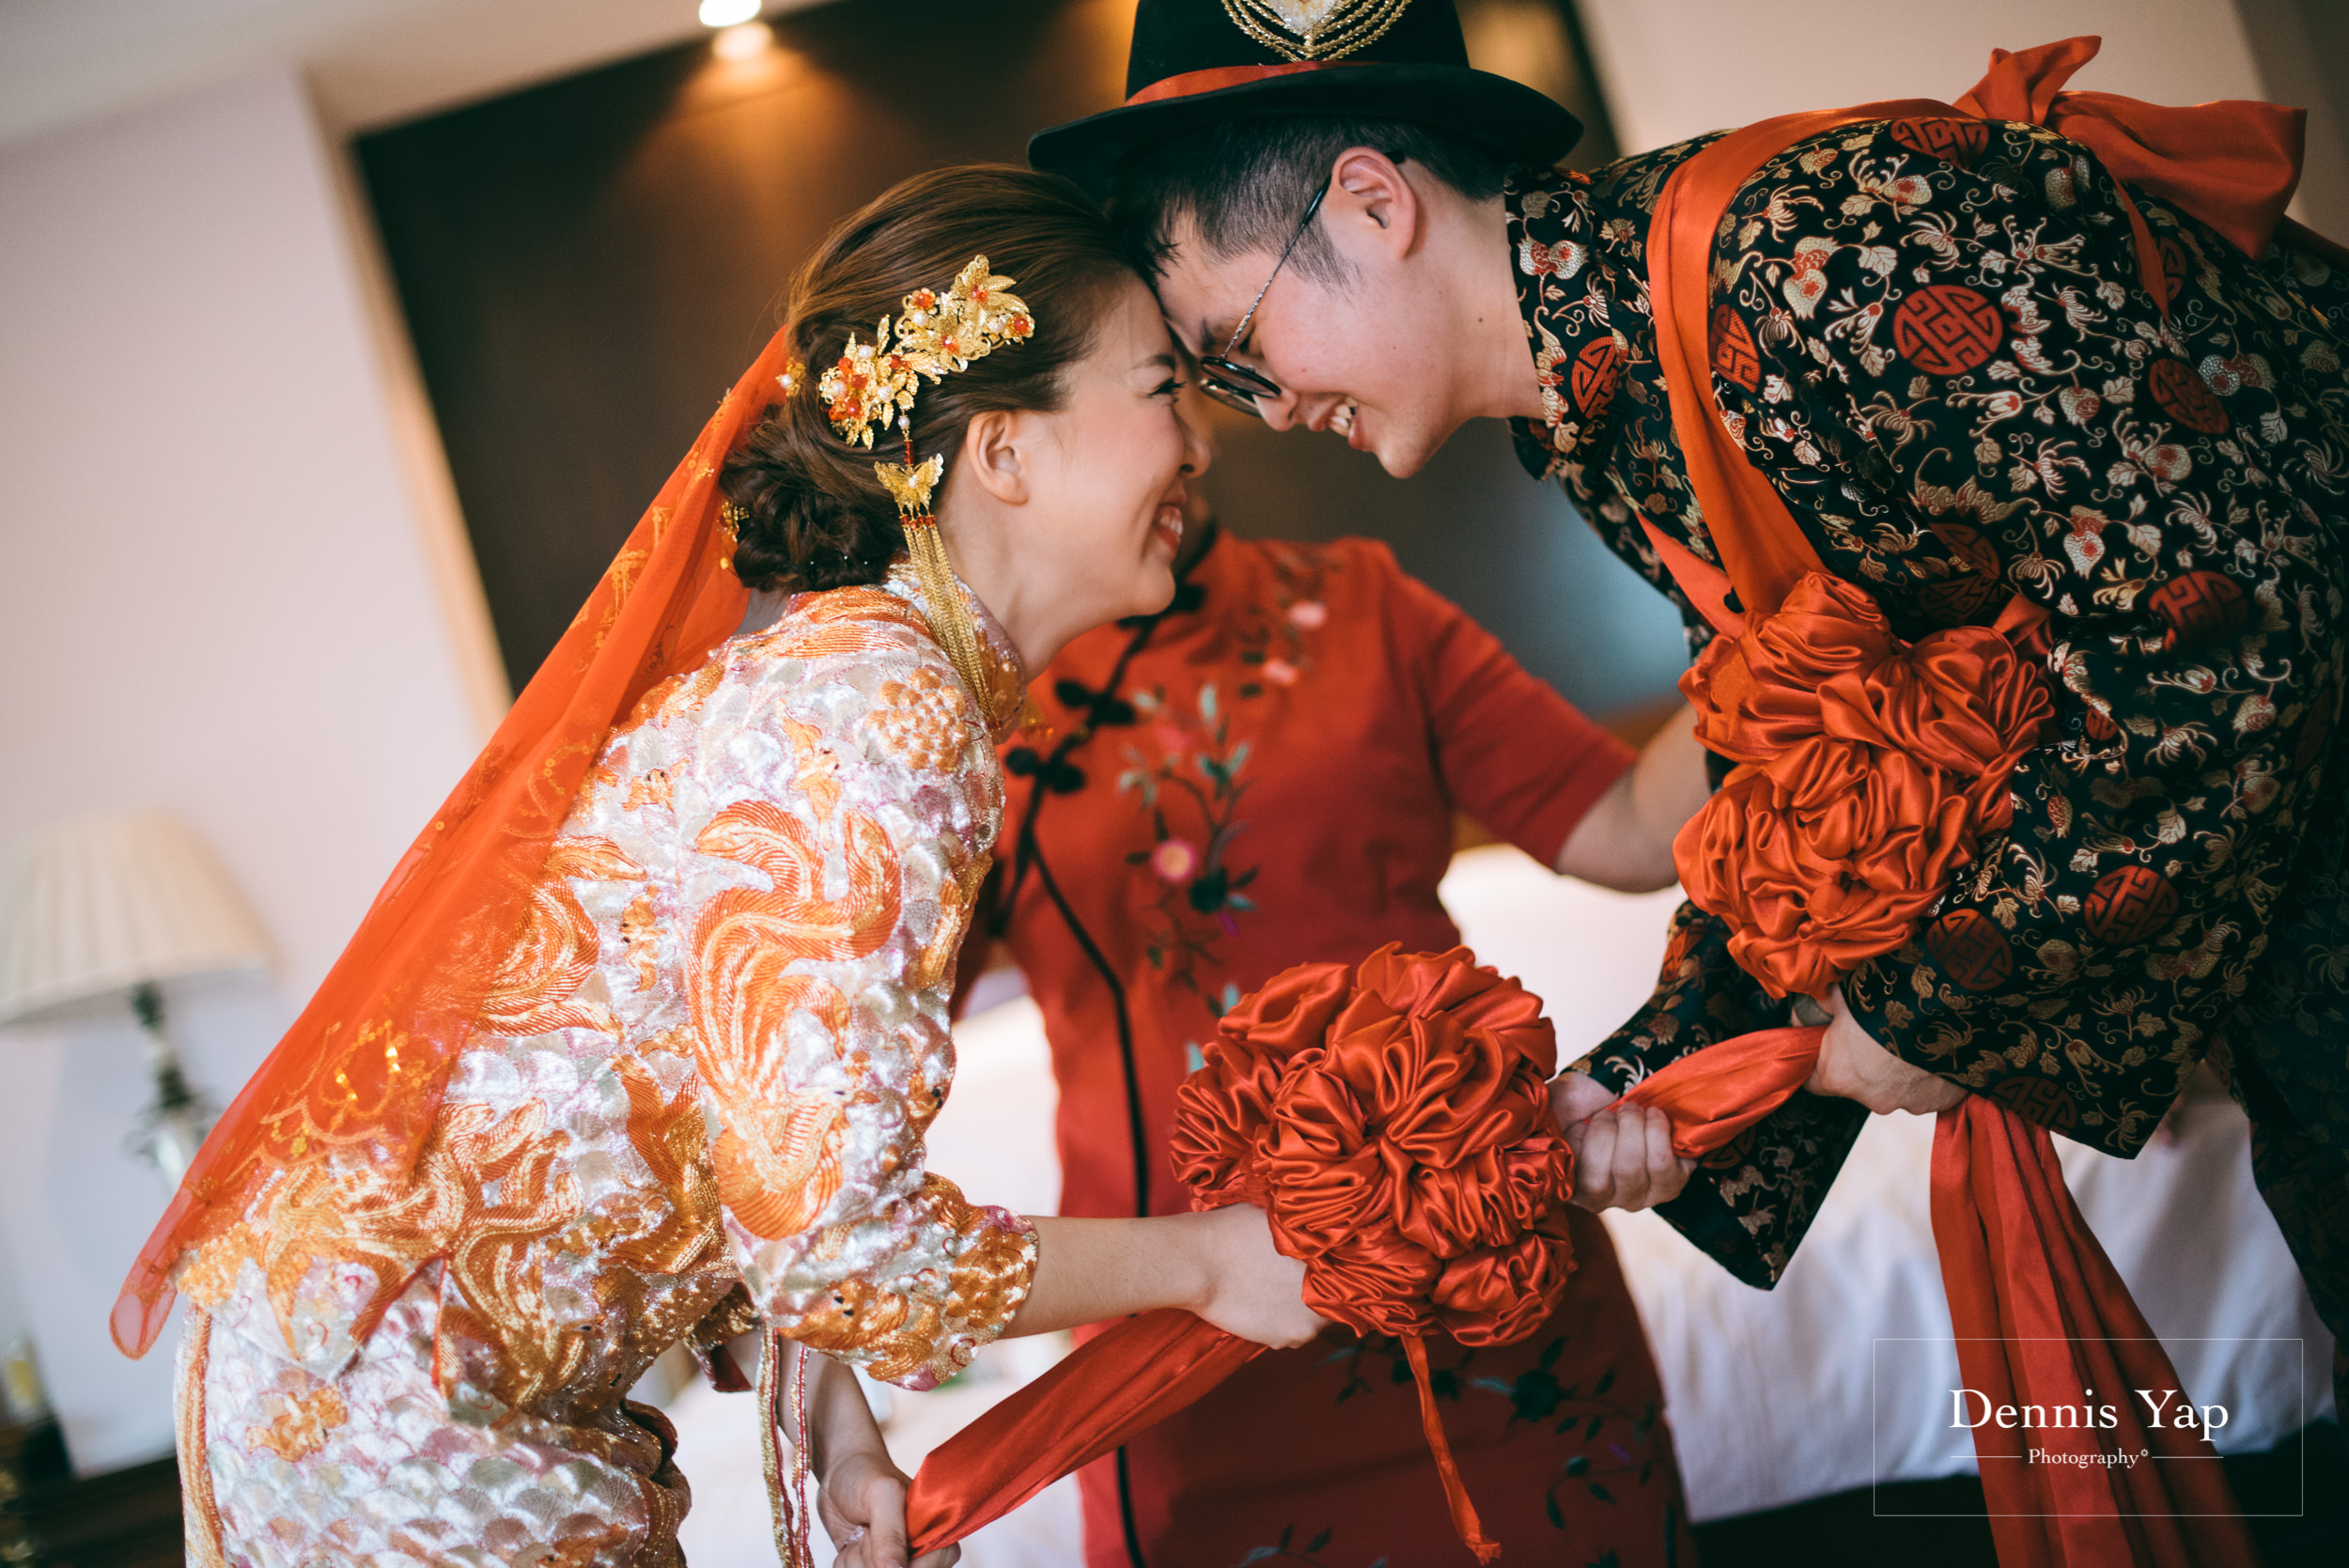 bobby fiona dennis yap photography malaysia wedding photographer chinese traditional-77.jpg